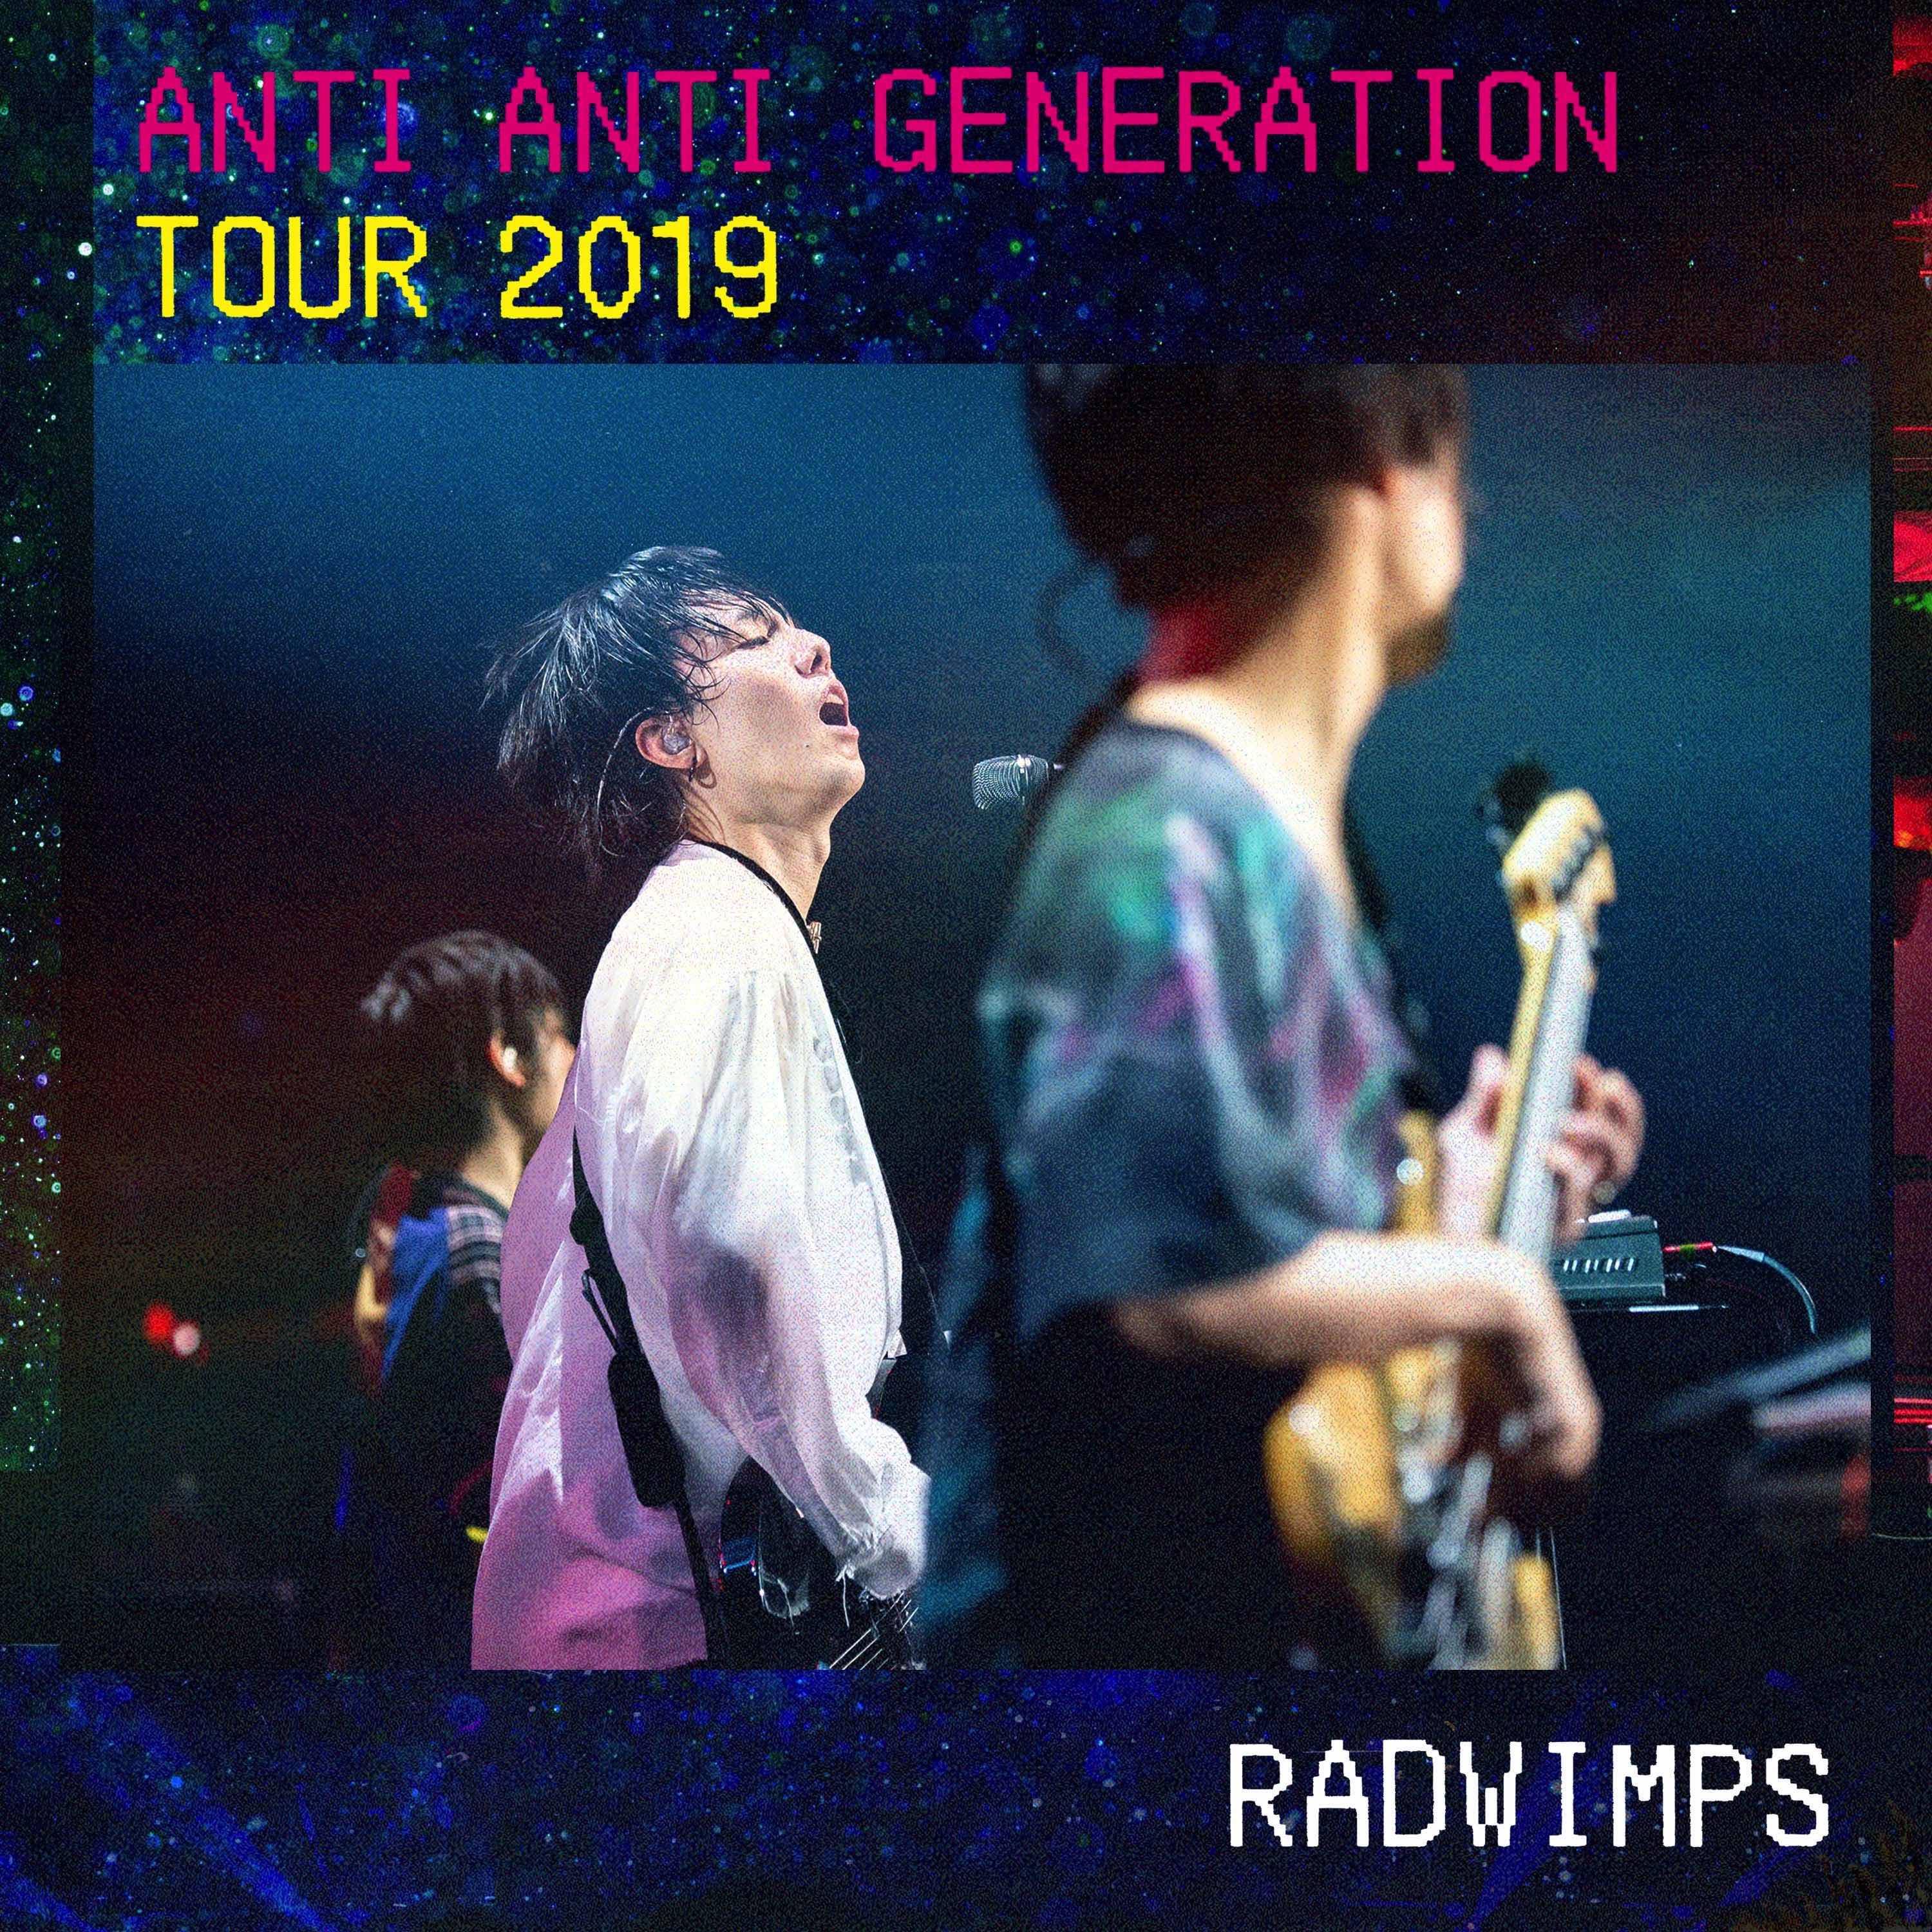 Radwimps 横浜アリーナ公演のライブ映像をapple Music限定で配信 音楽